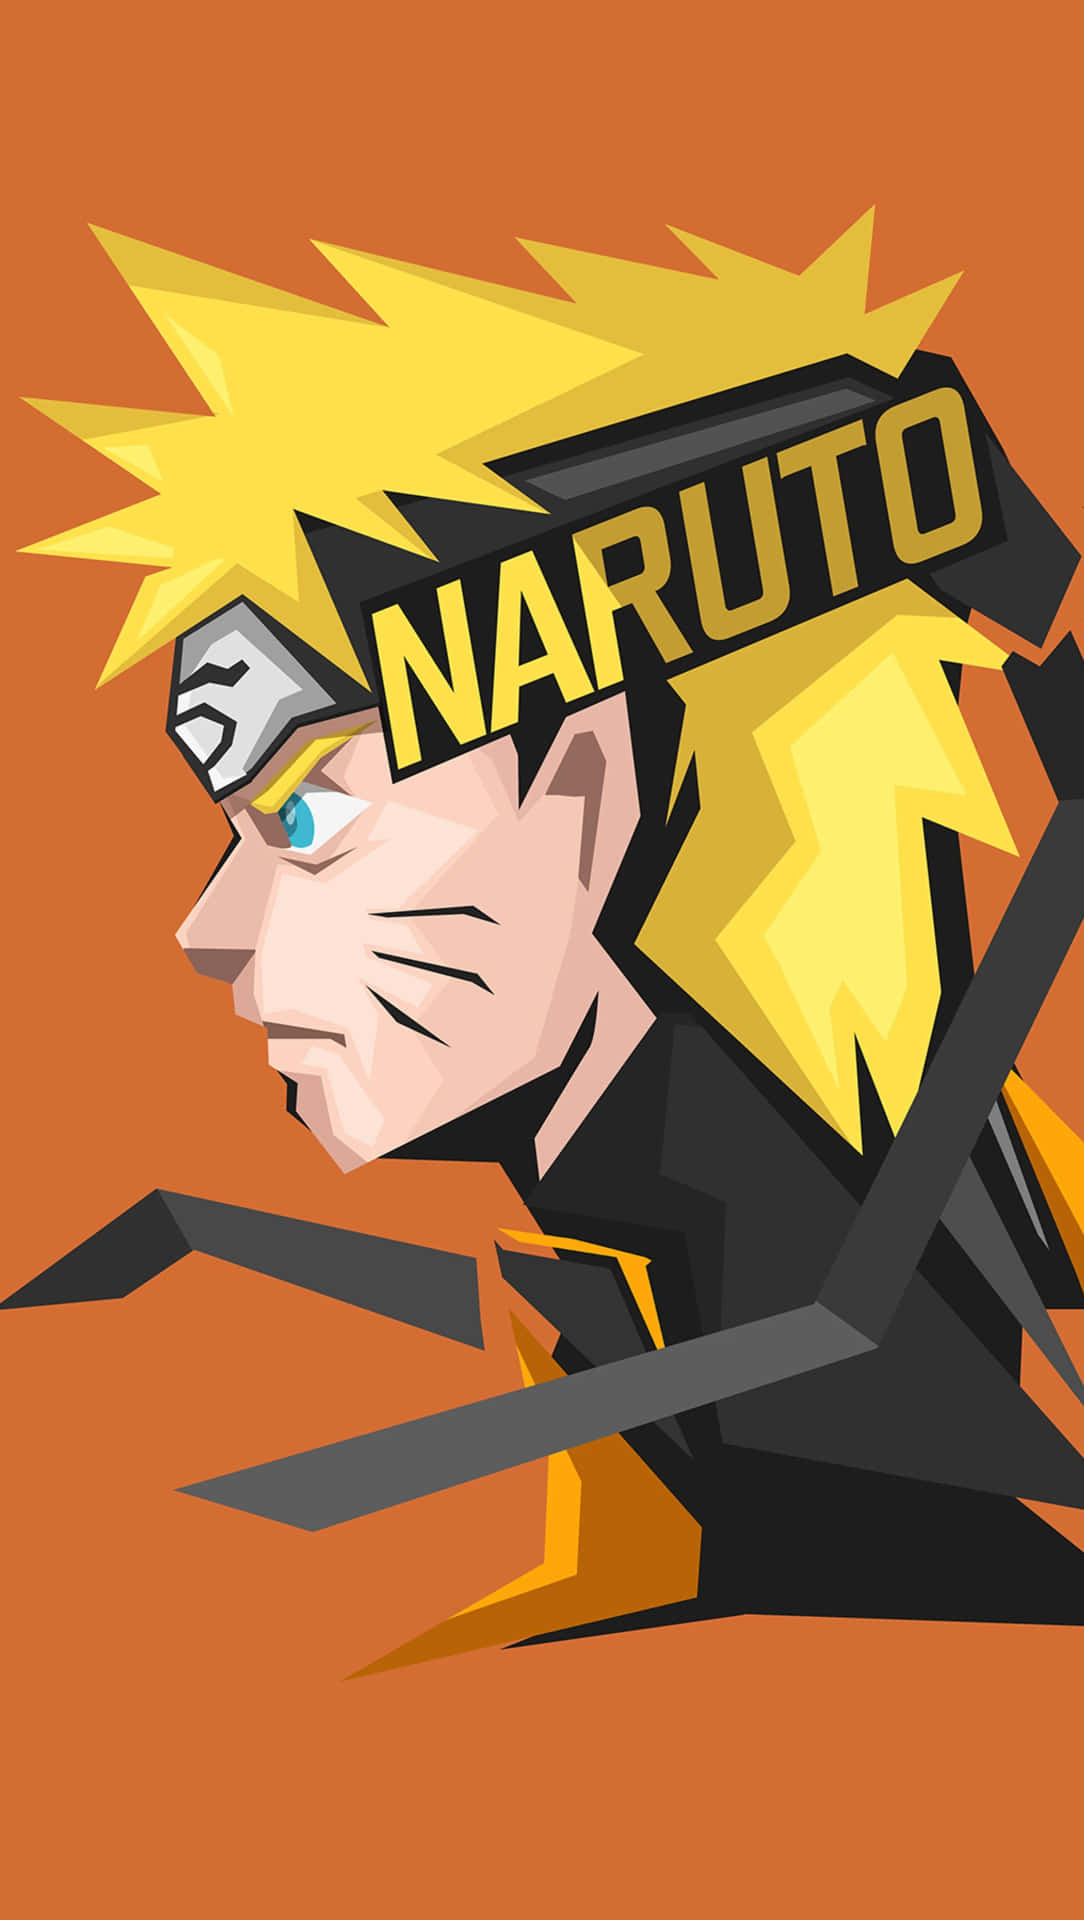 Naruto Uzumaki fights a powerful enemy.